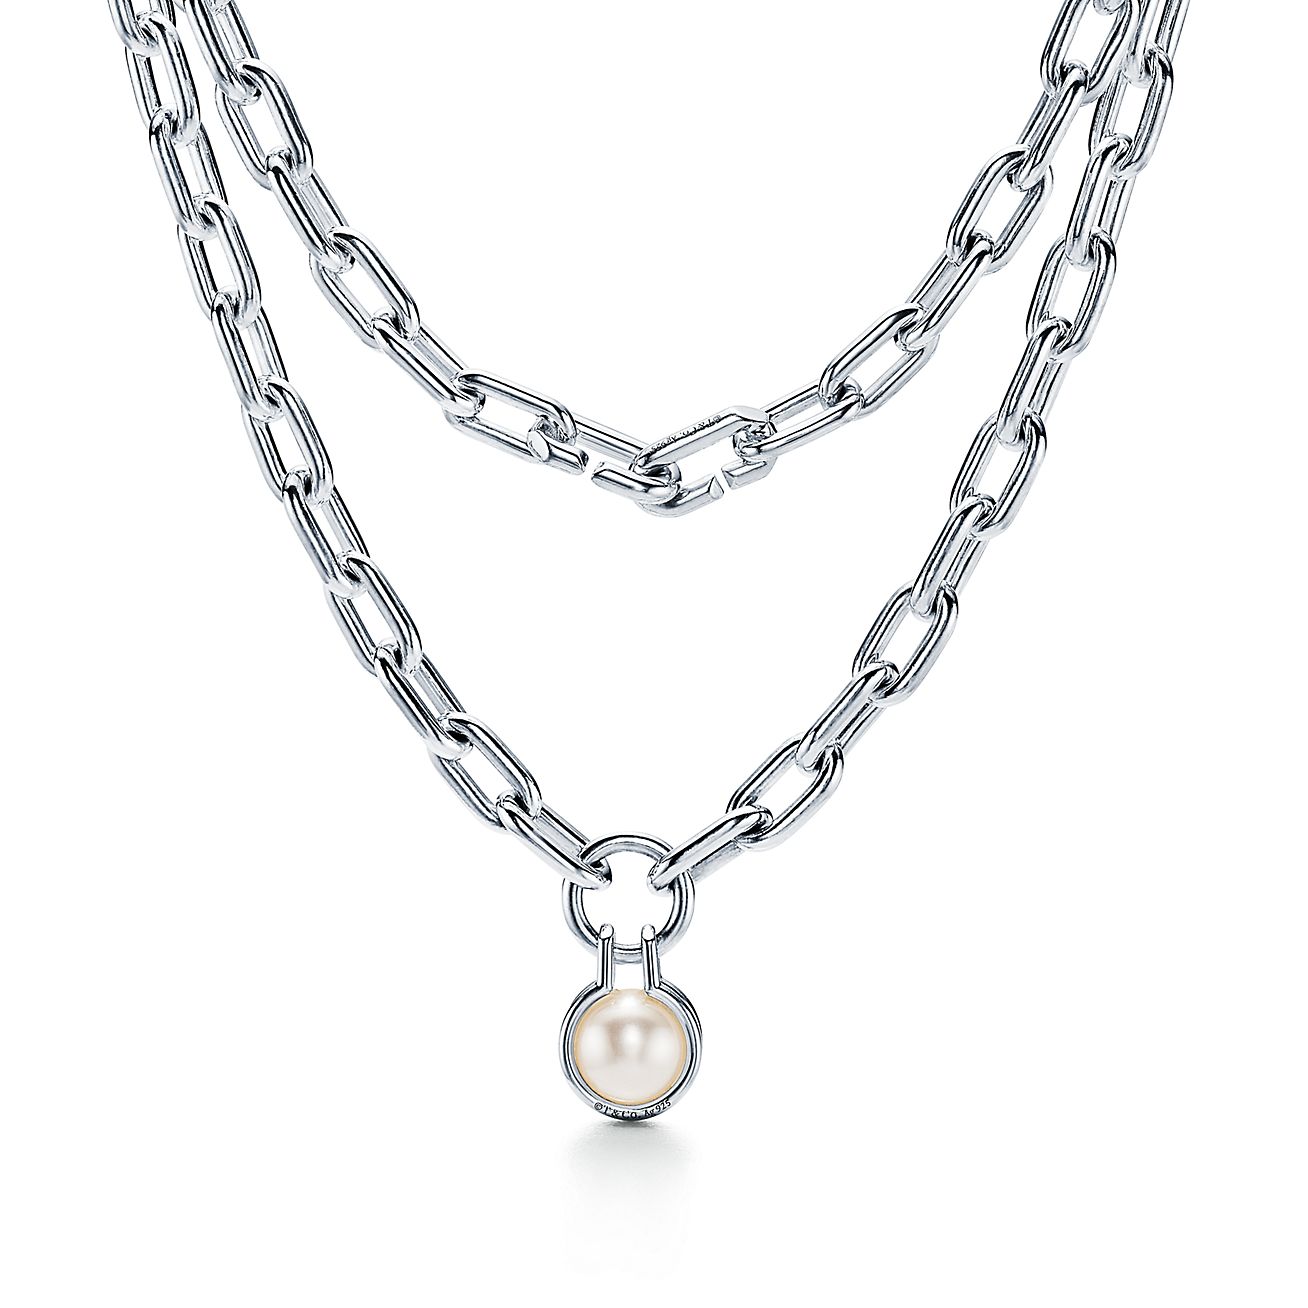 Tiffany HardWear Freshwater Pearl Necklace in Sterling Silver, 32"